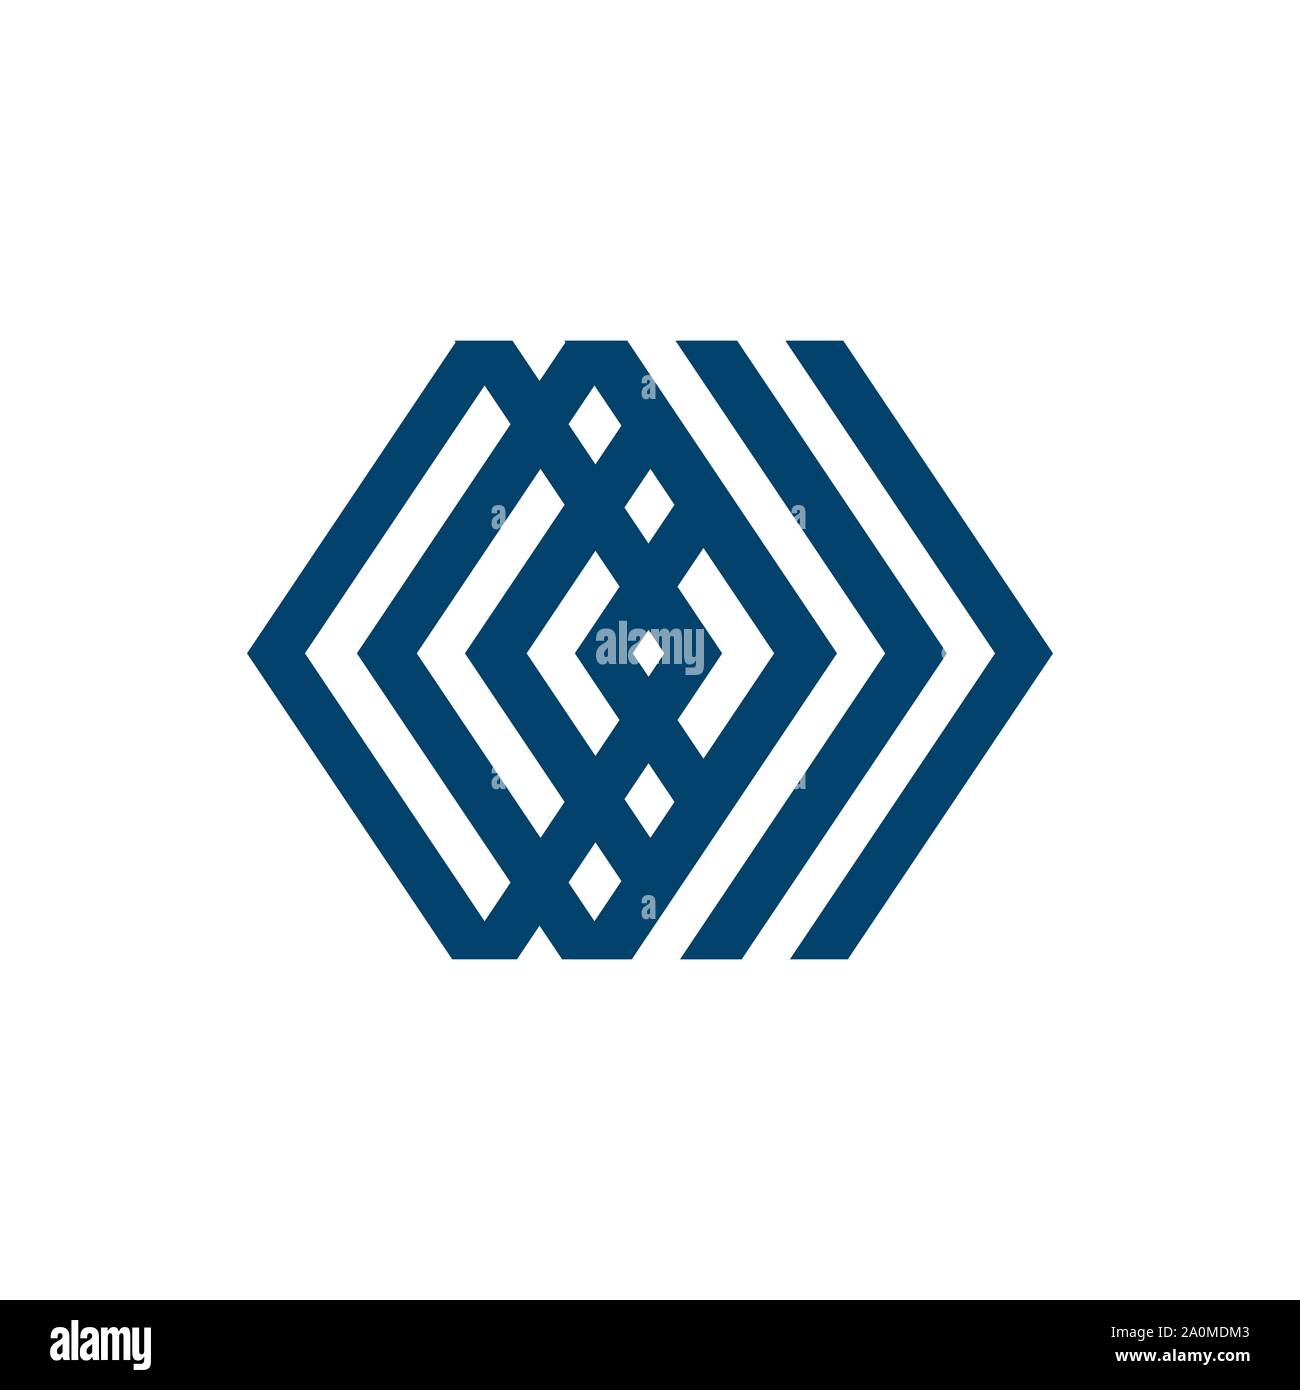 modern style geometric hexagonal logo design icon vector element Stock Vector